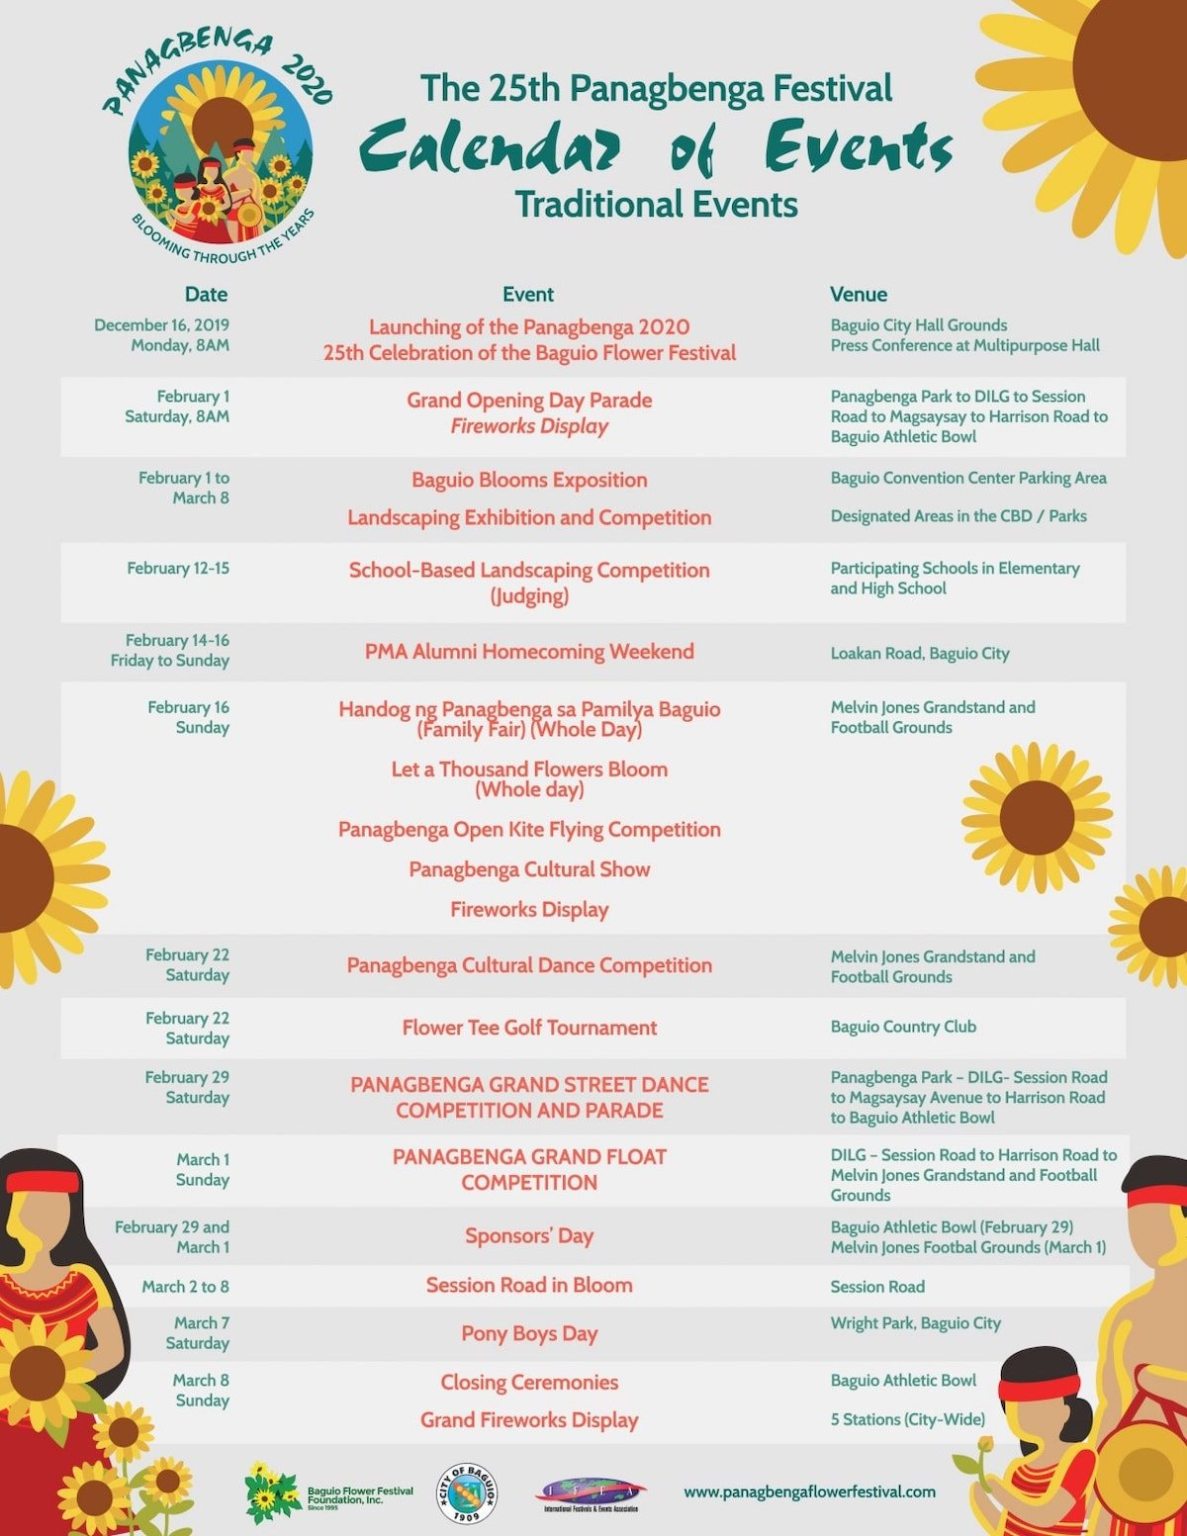 2020 Baguio Panagbenga Festival Schedule Philippines - Travelgoeasy